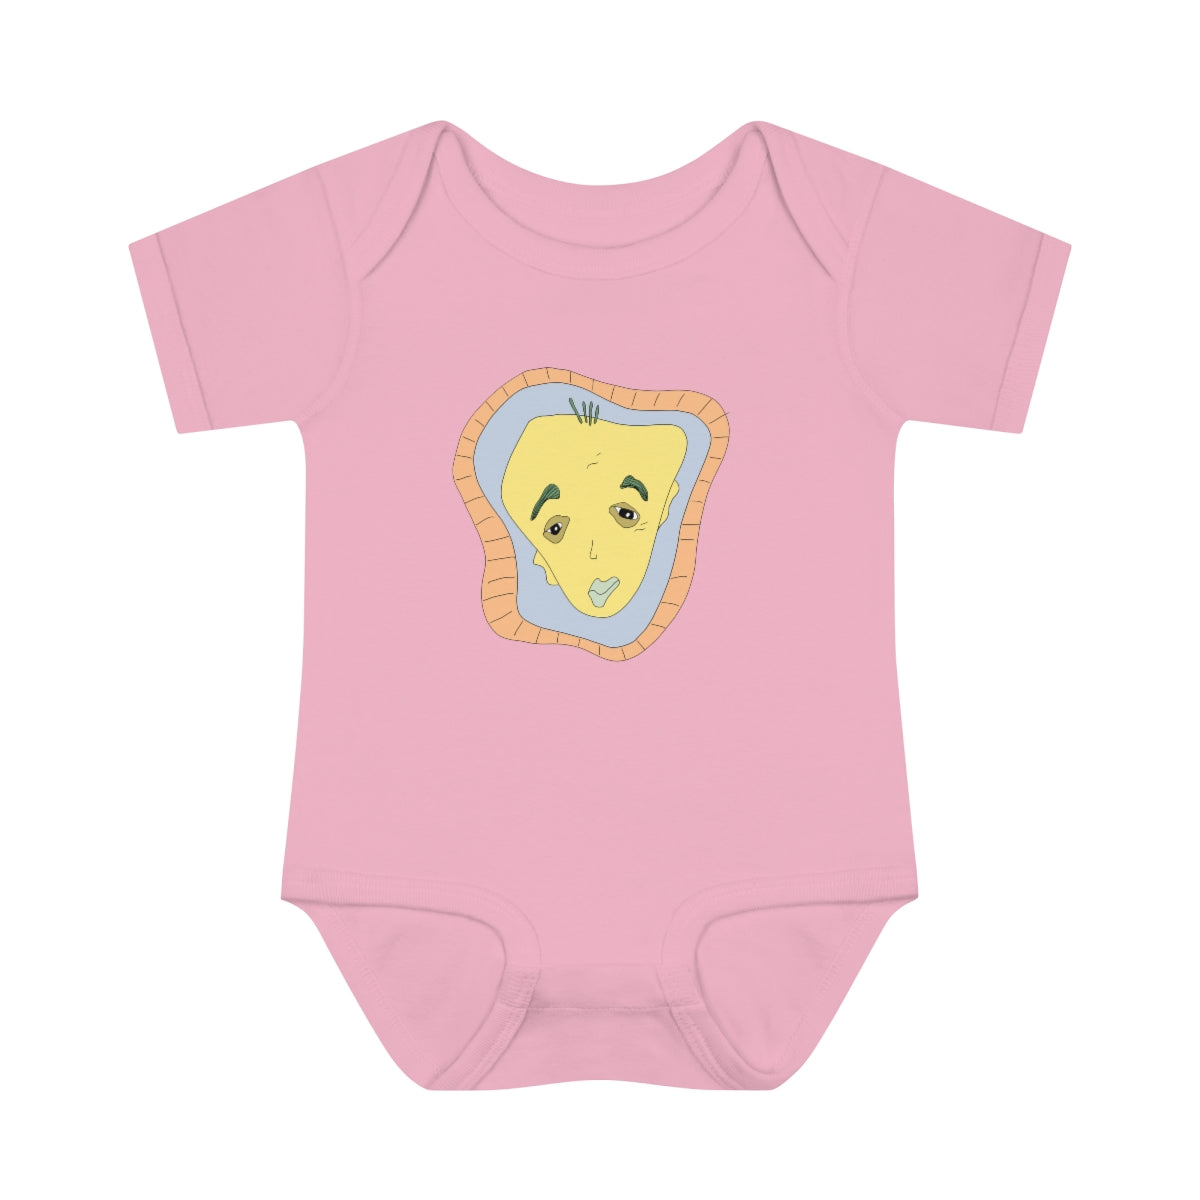 turnip freak - infant onesie